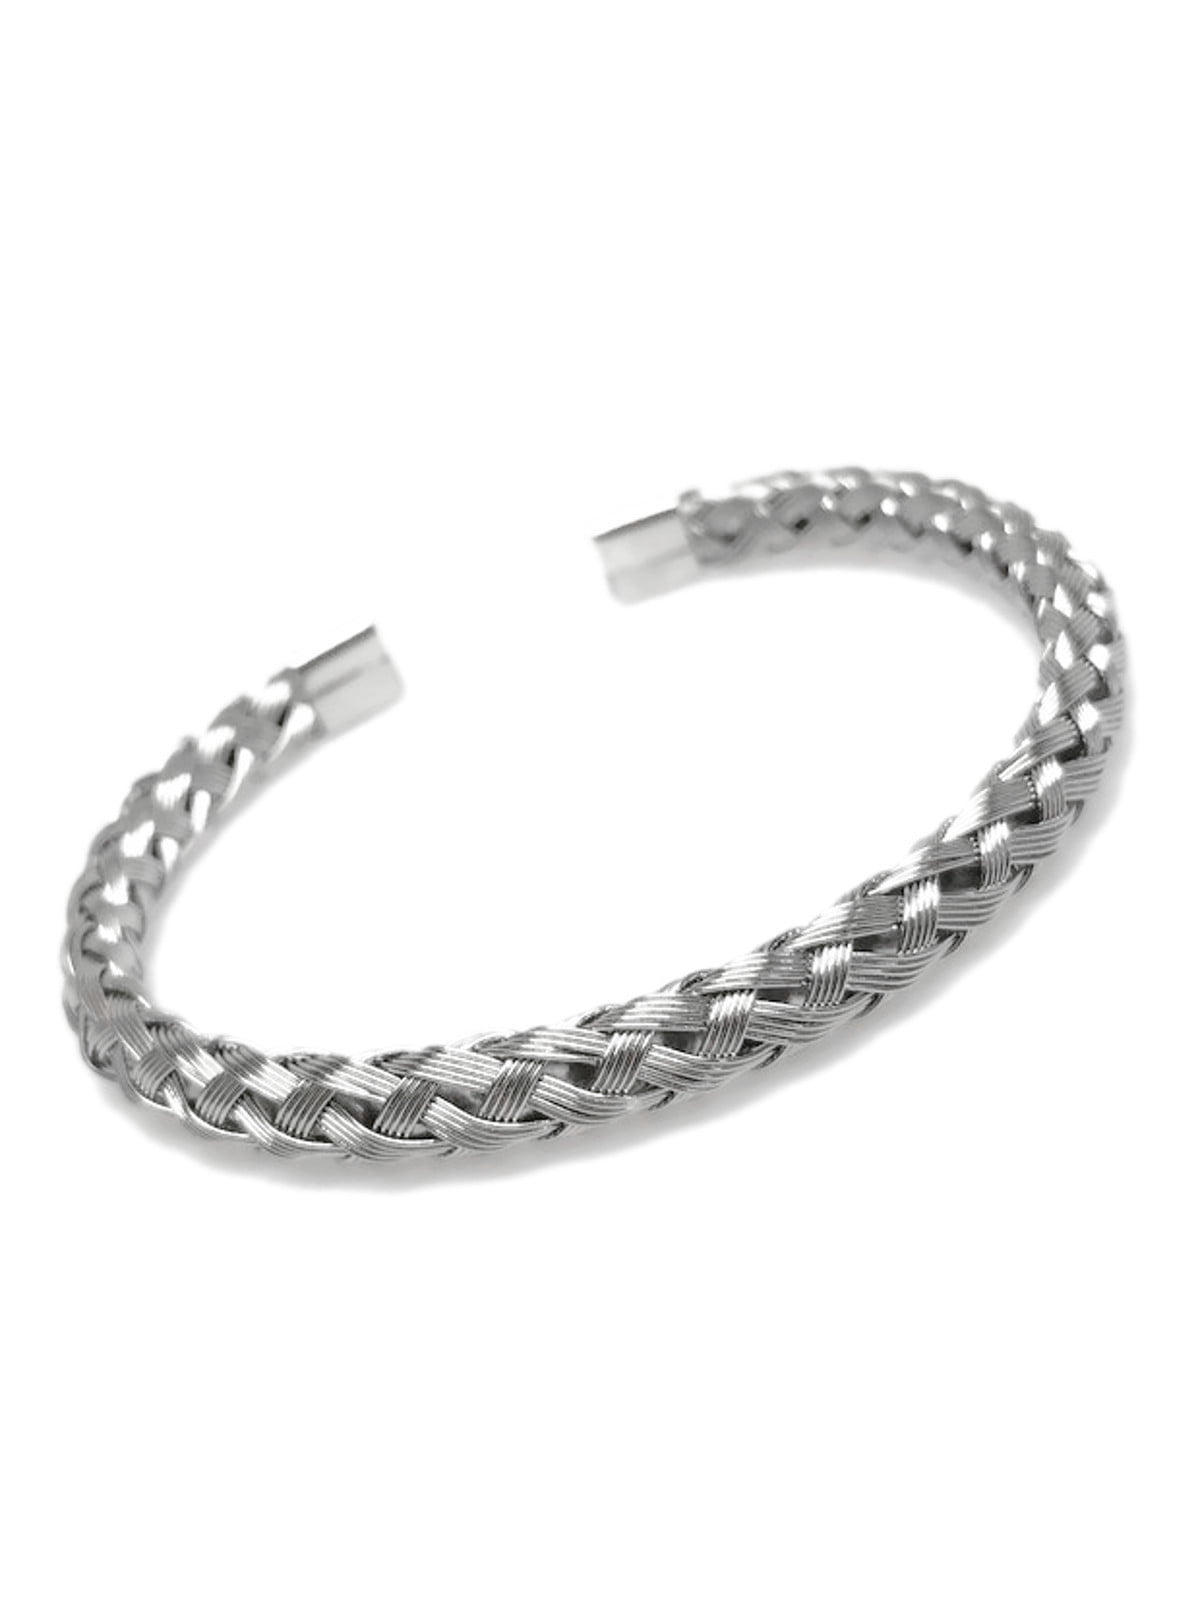 Fashion Unisex's Stainless Steel Cuff Clasp Bangle Bracelet Wristband Jewelry 